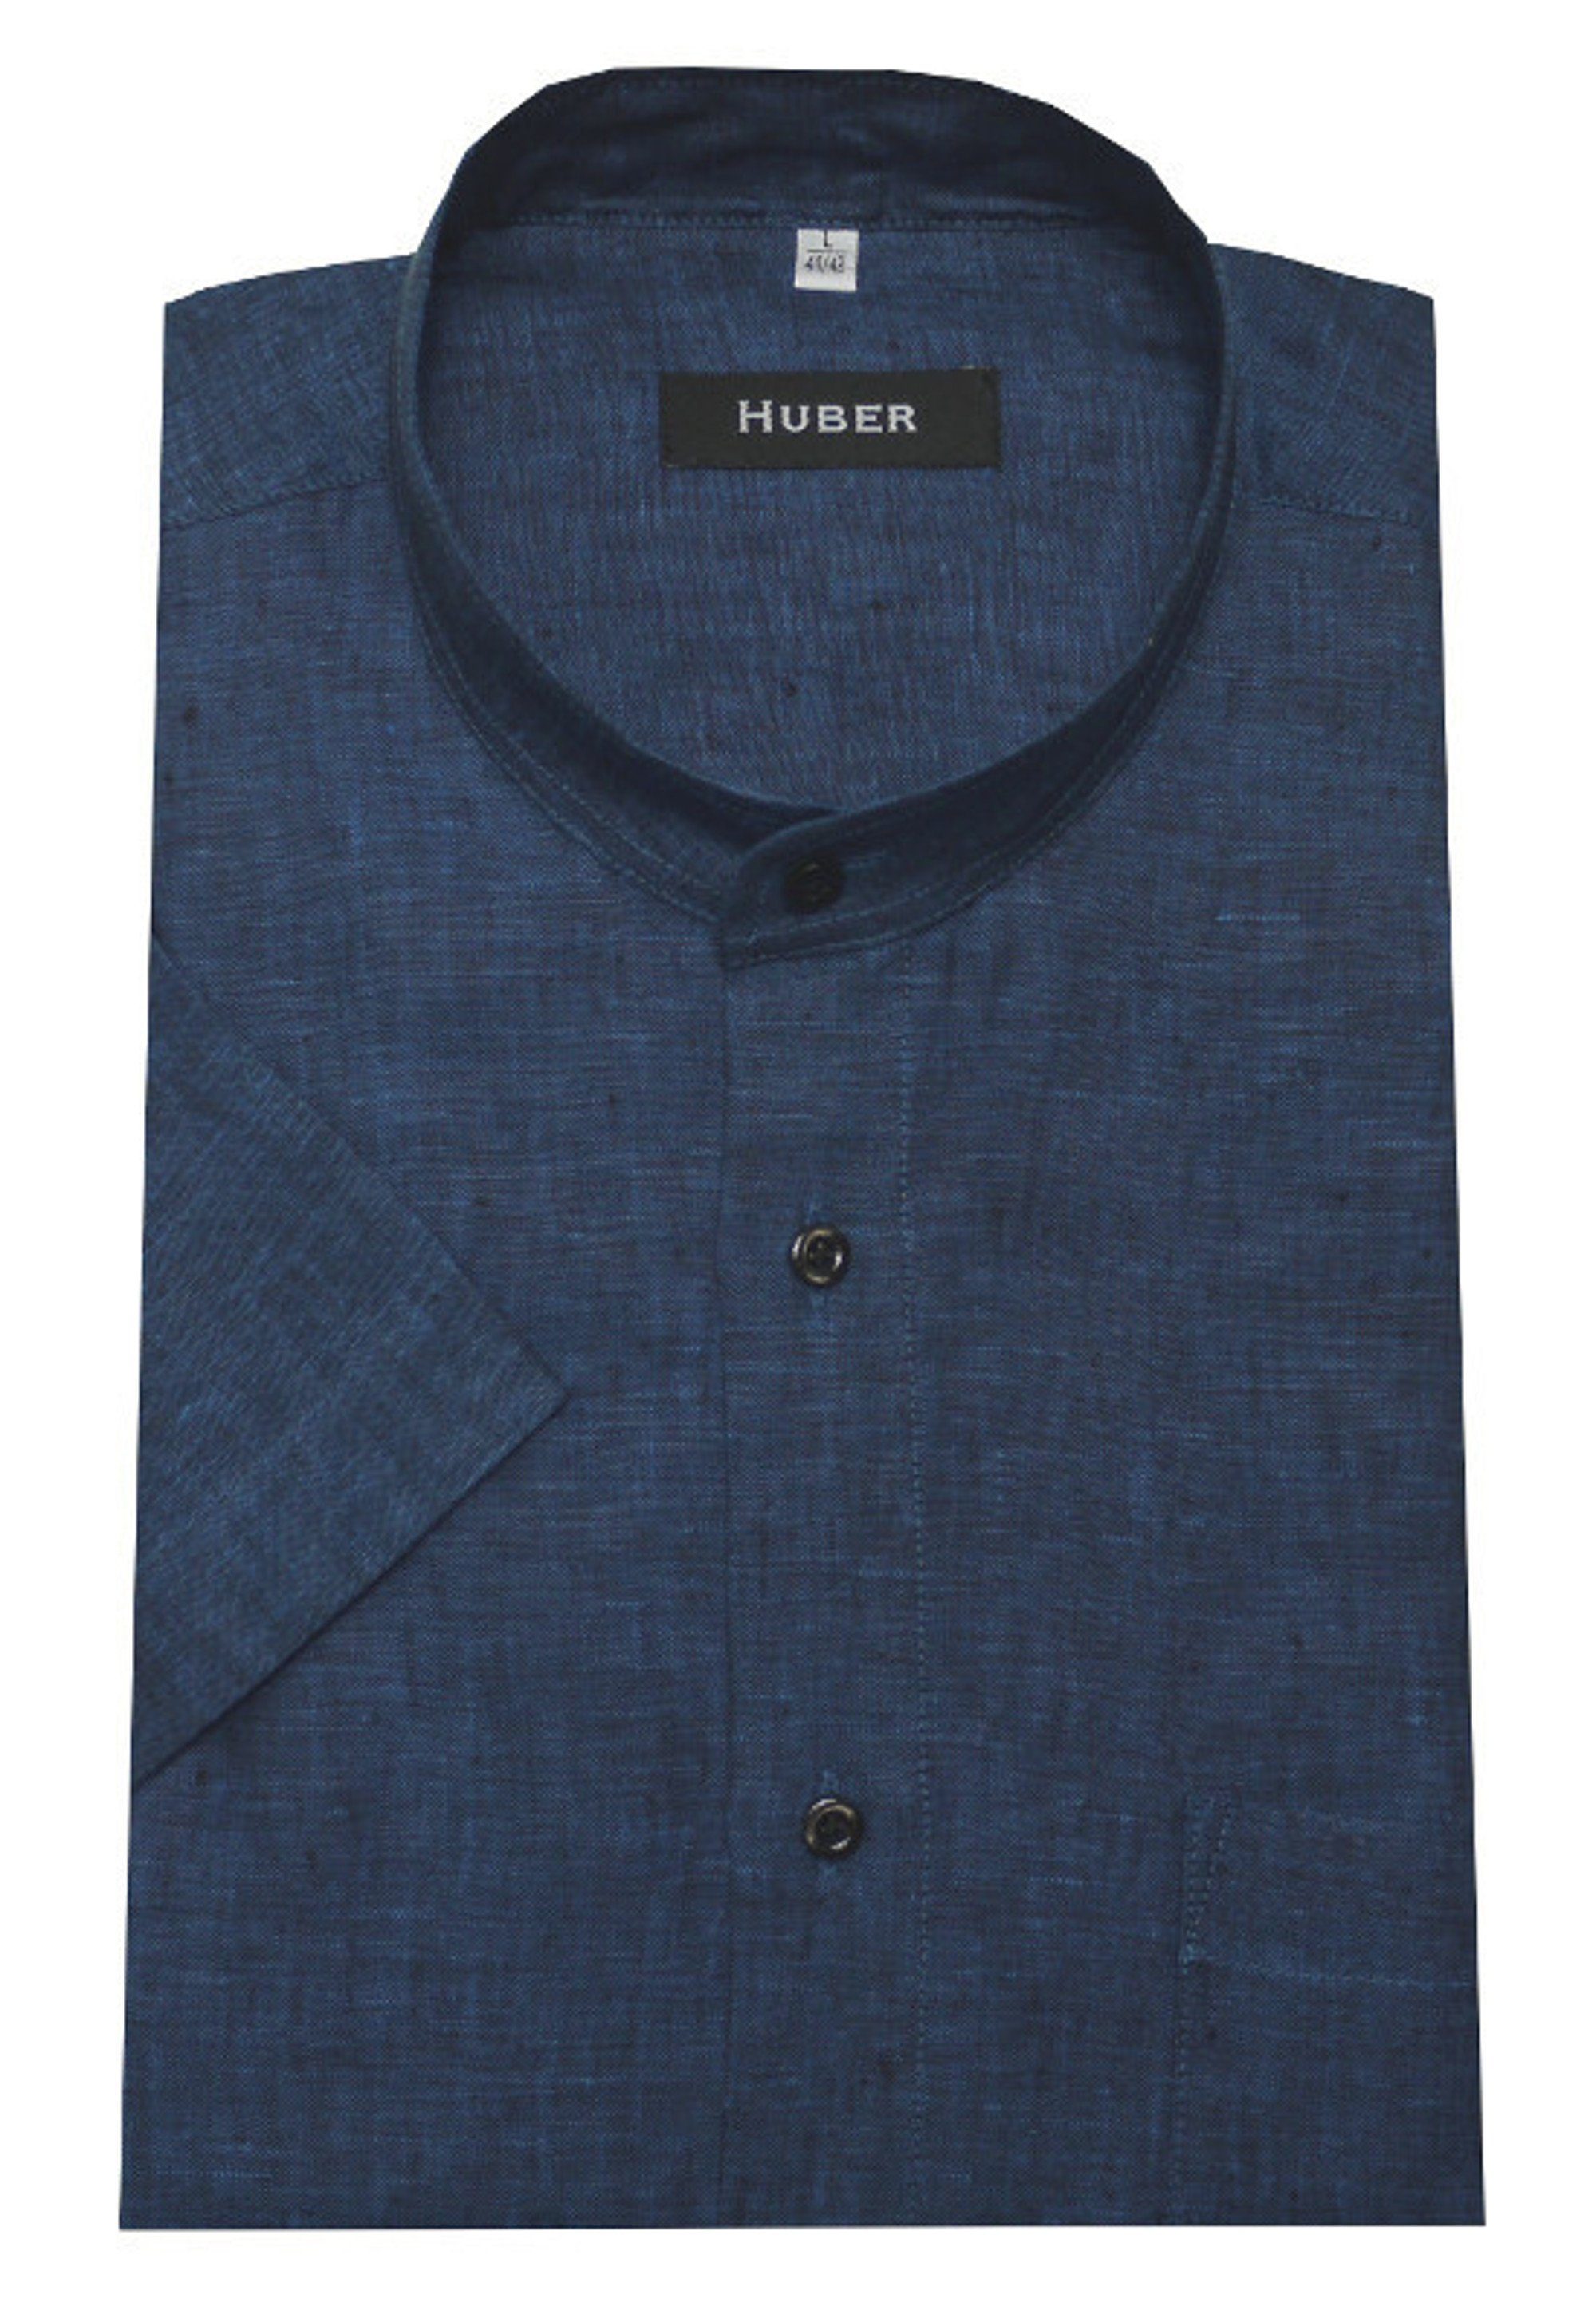 Huber Hemden Kurzarmhemd HU-0114 Kurzarm leichter Regular Fit blau Stoff 100%Leinen-feiner Stehkragen